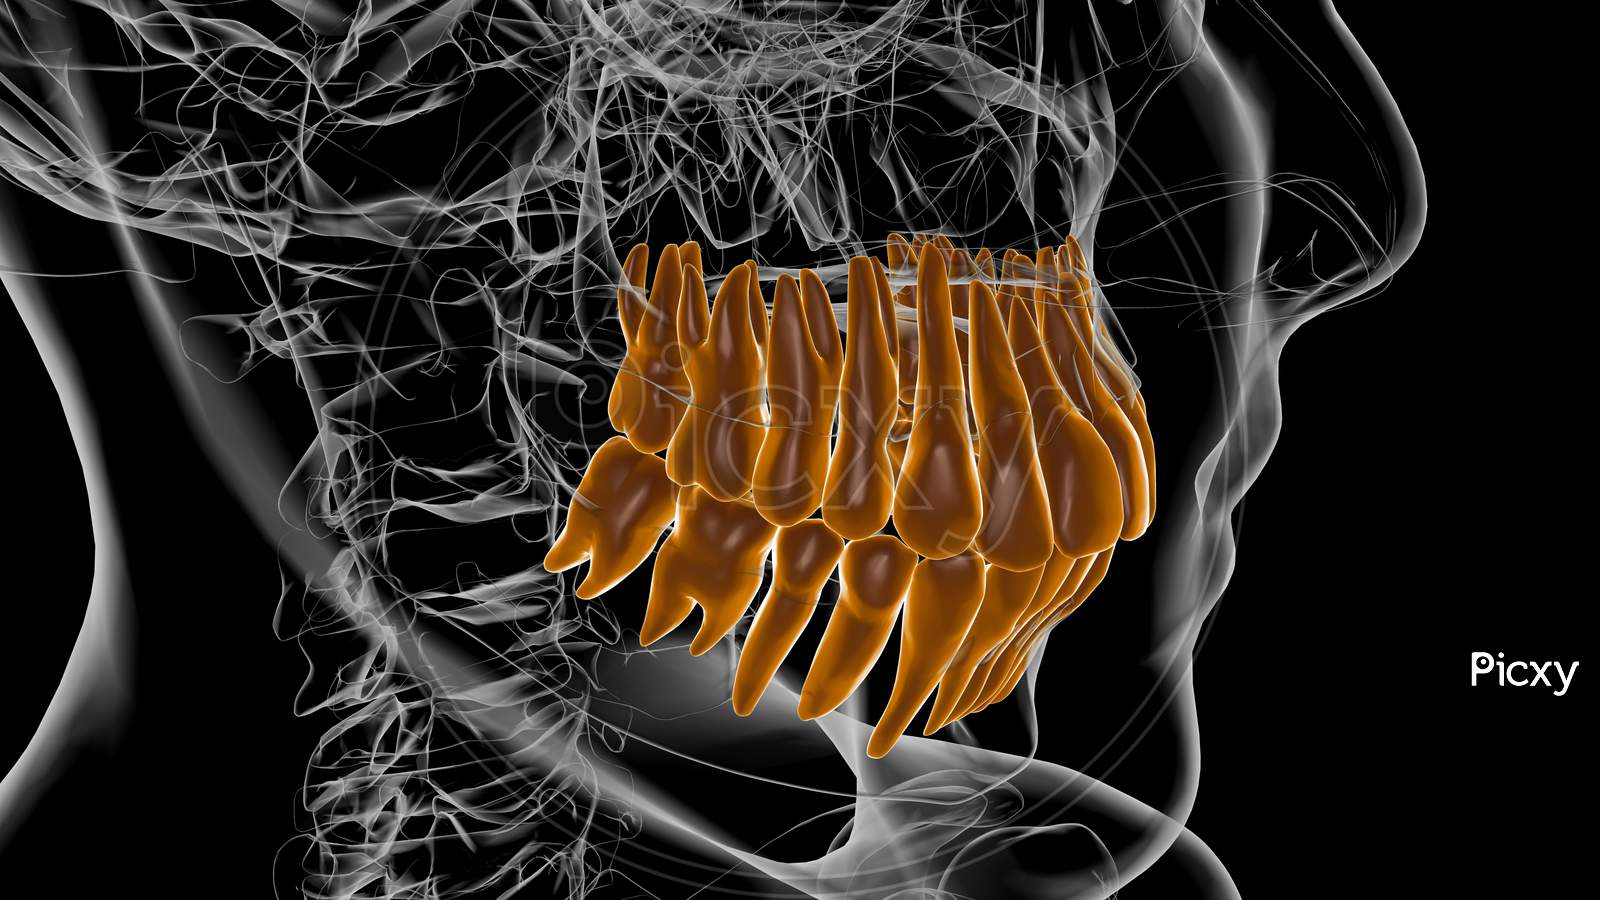 Human Teeth Anatomy 3D Illustration For Medical